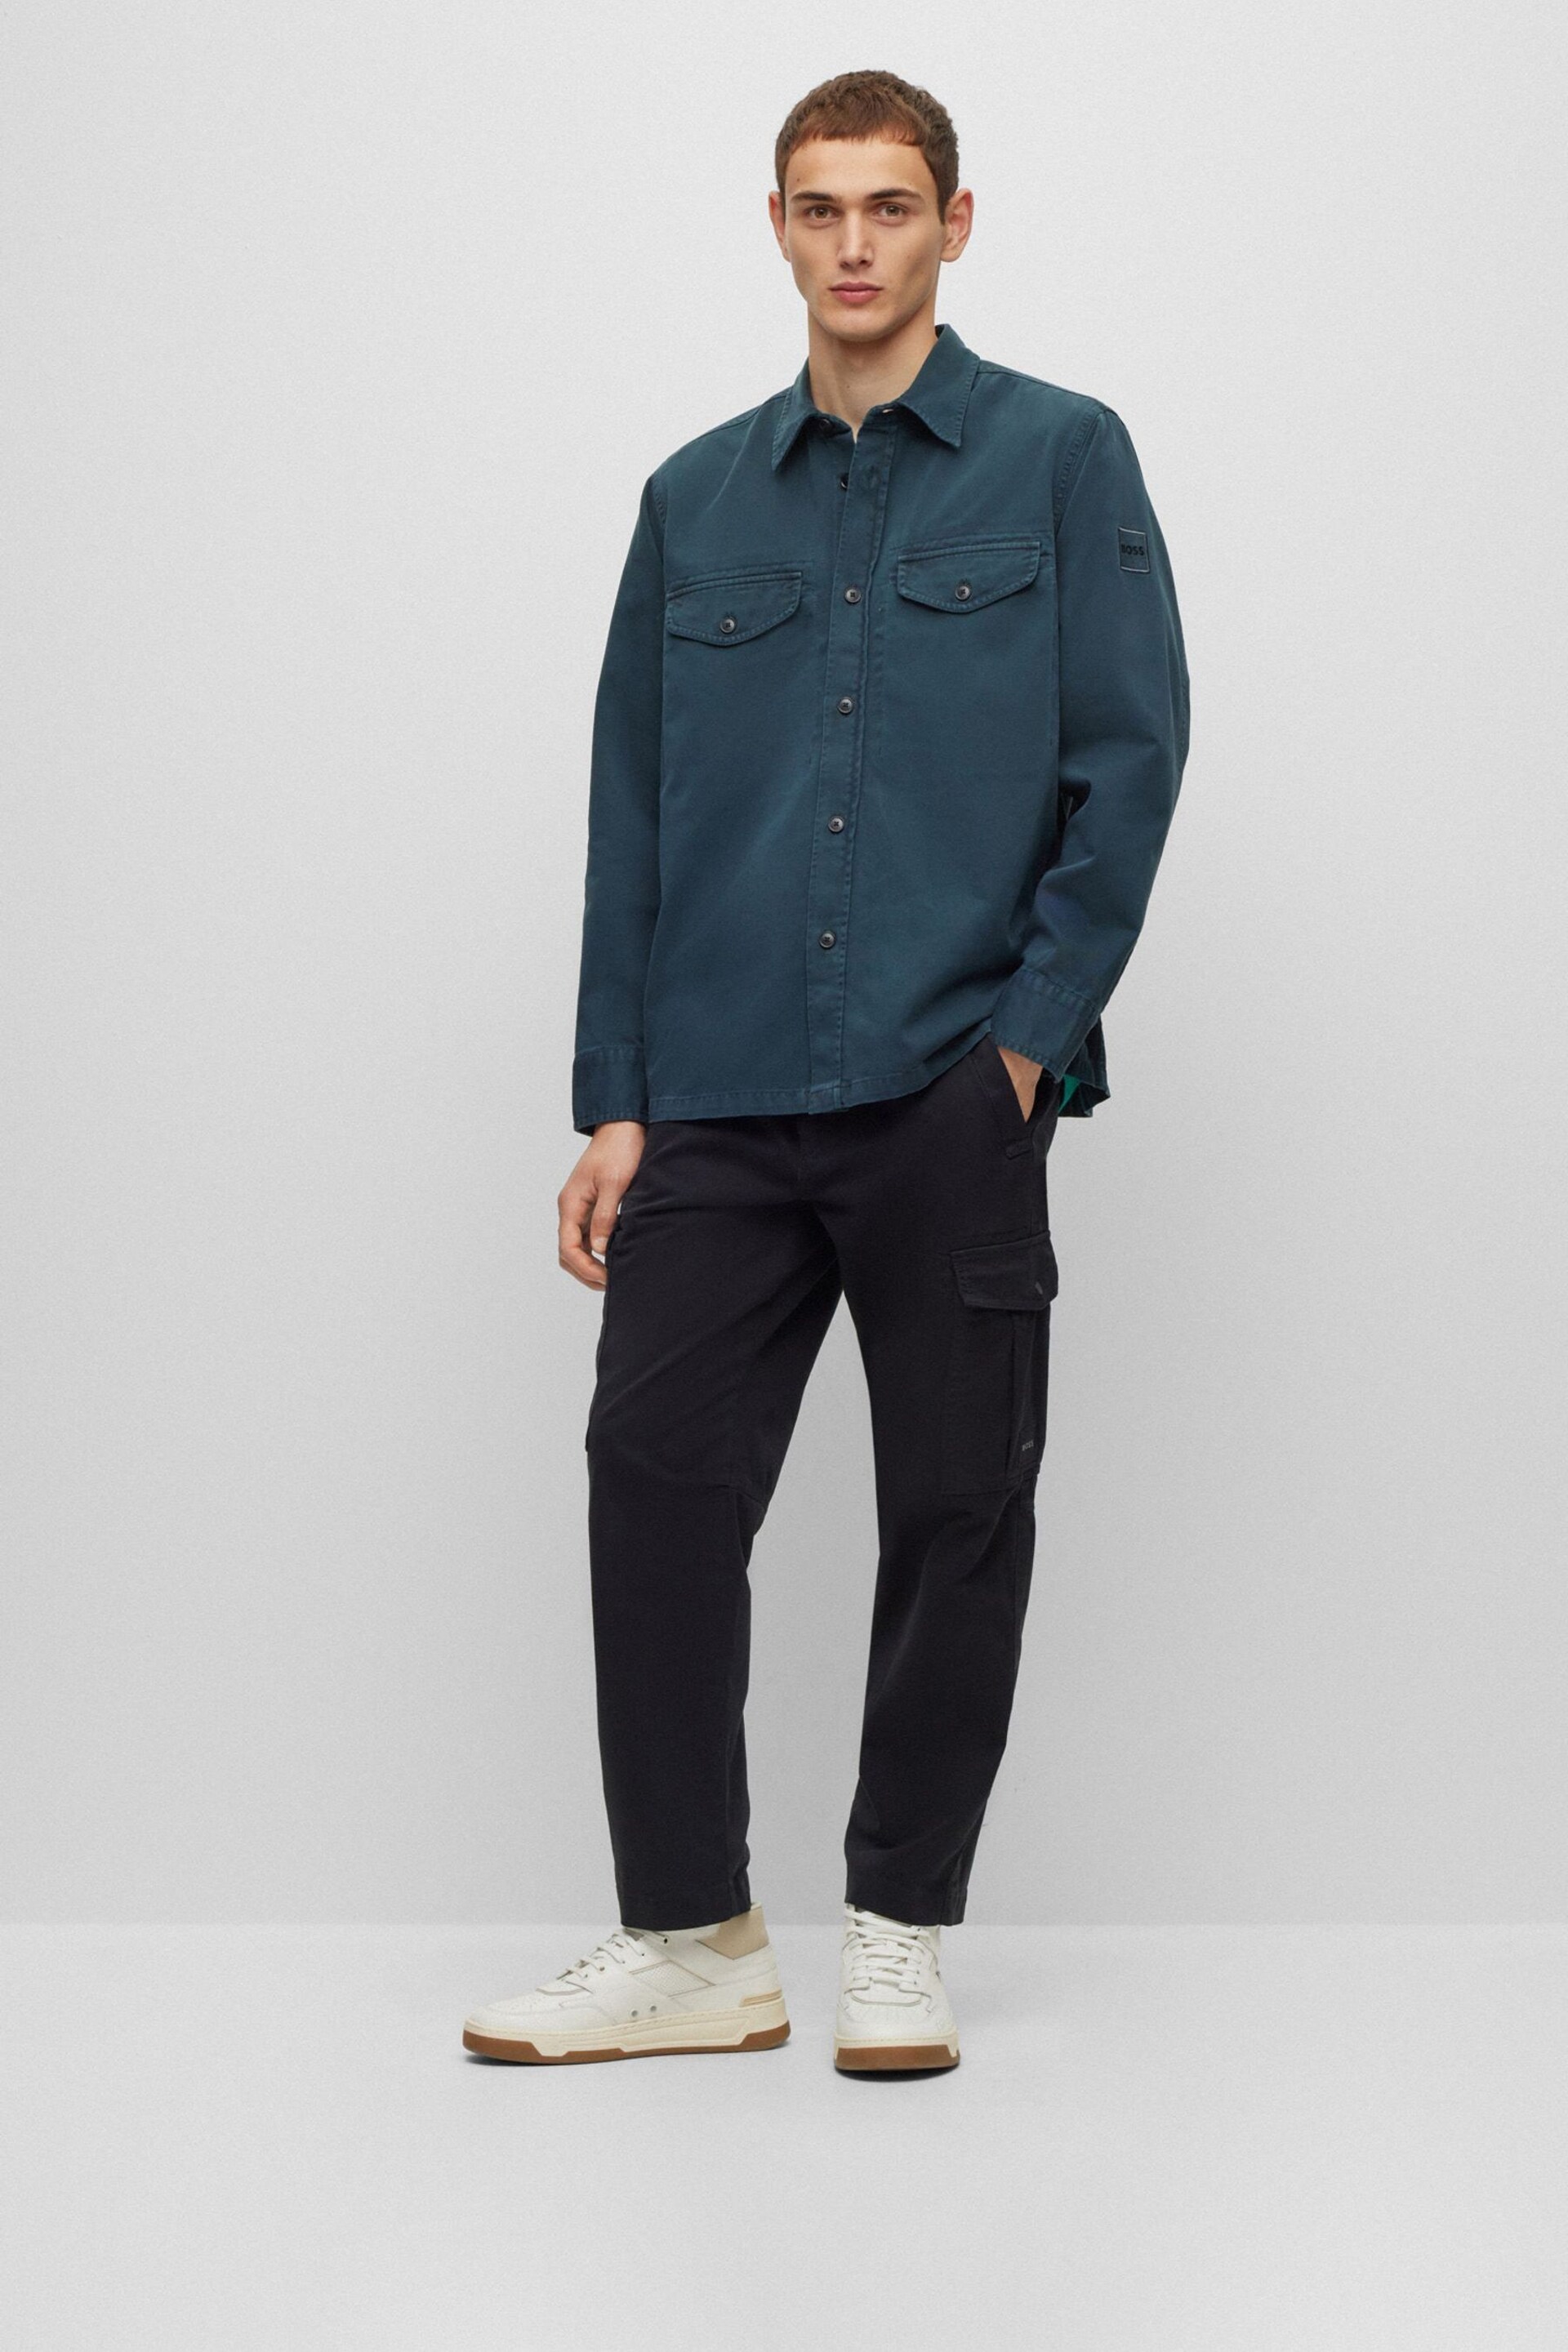 BOSS Green Garment Dyed Twill Overshirt - Image 3 of 6